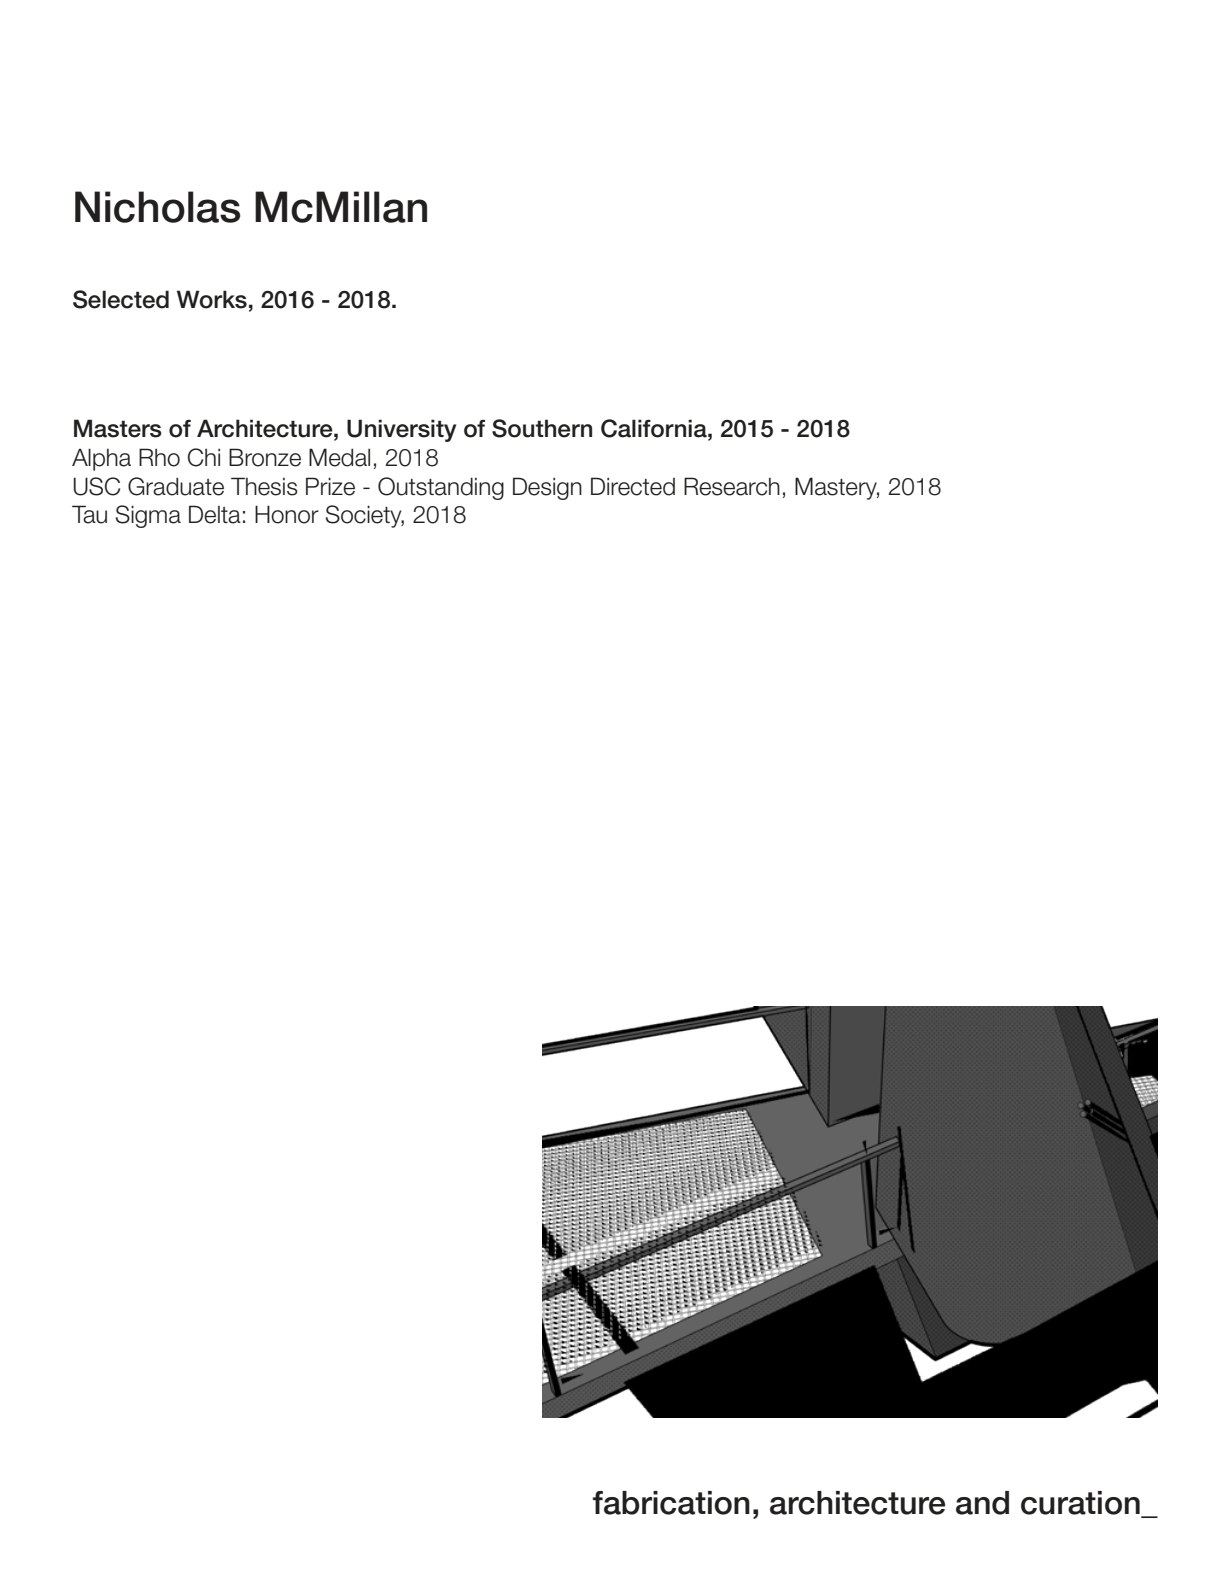 Nicholas Mcmillan Archinect